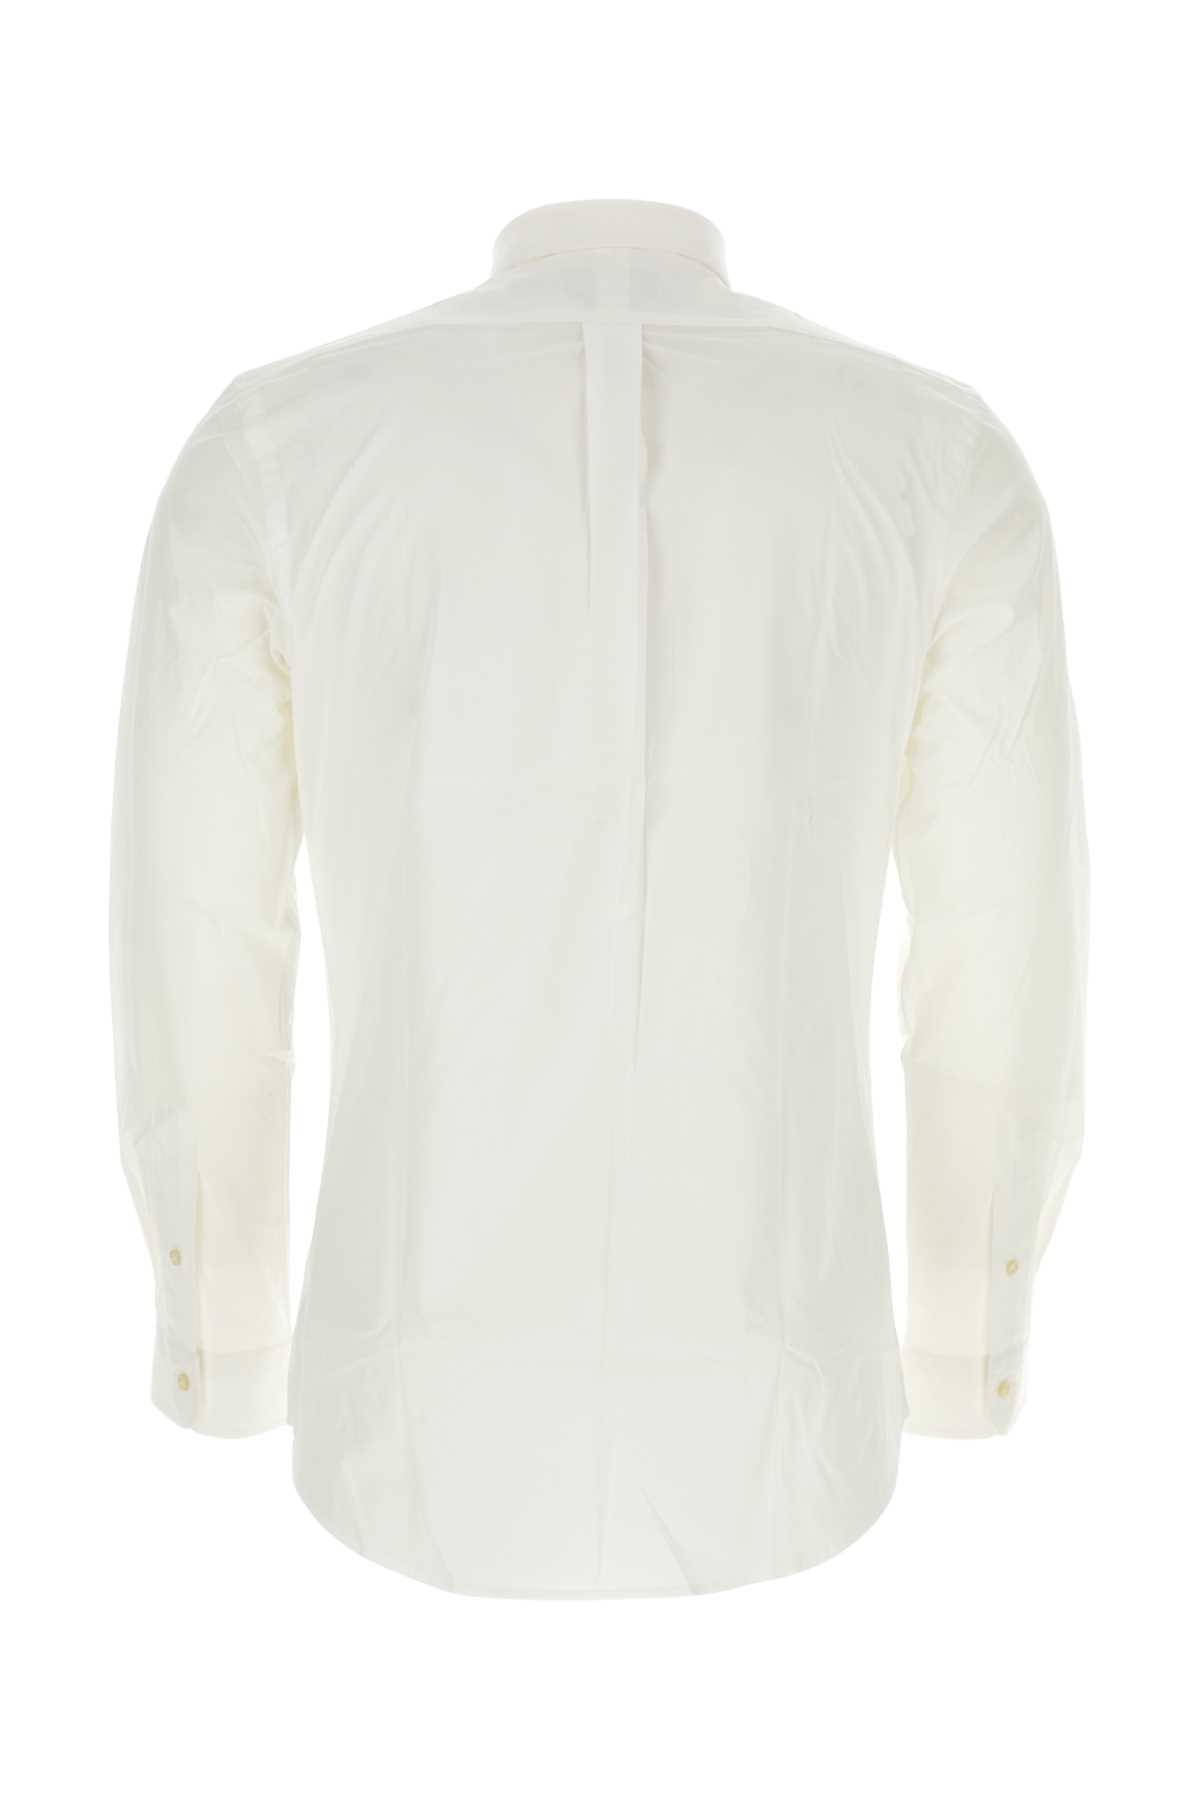 Polo Ralph Lauren White Stretch Cotton Shirt